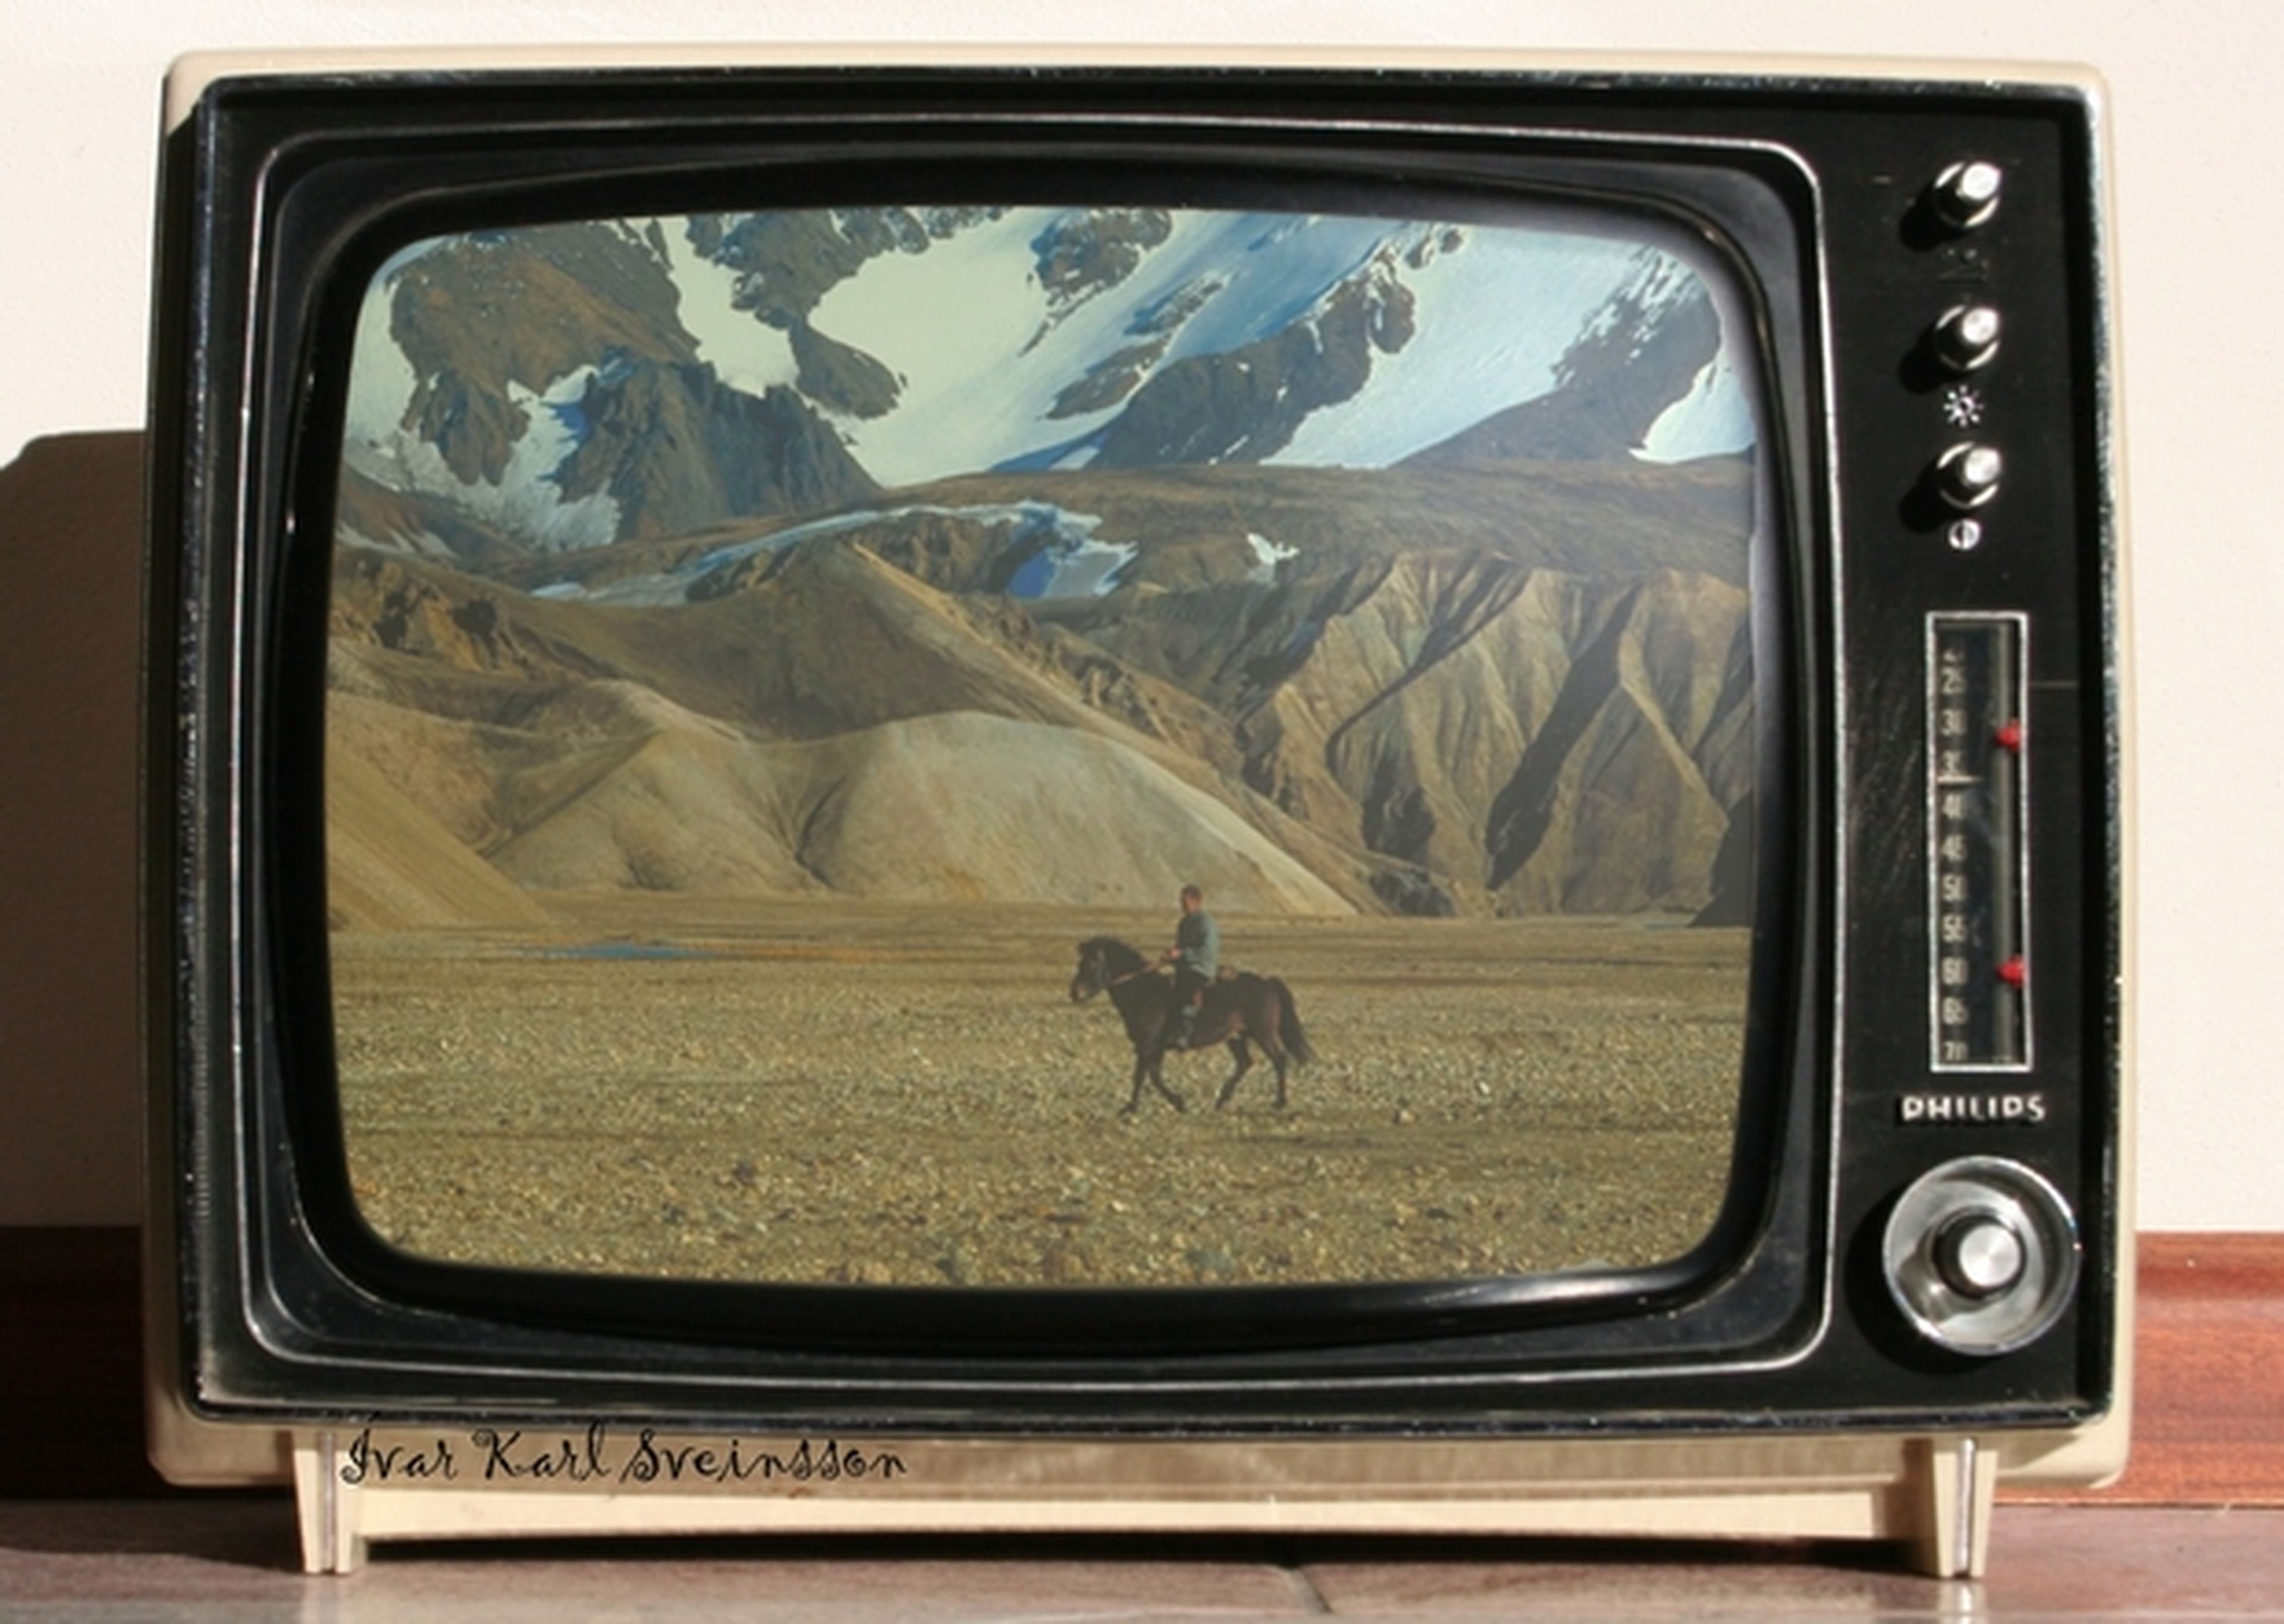 Телевизионный экран. Старый телевизор. Старинный телевизор. Ретро телевизор. Древний телевизор.